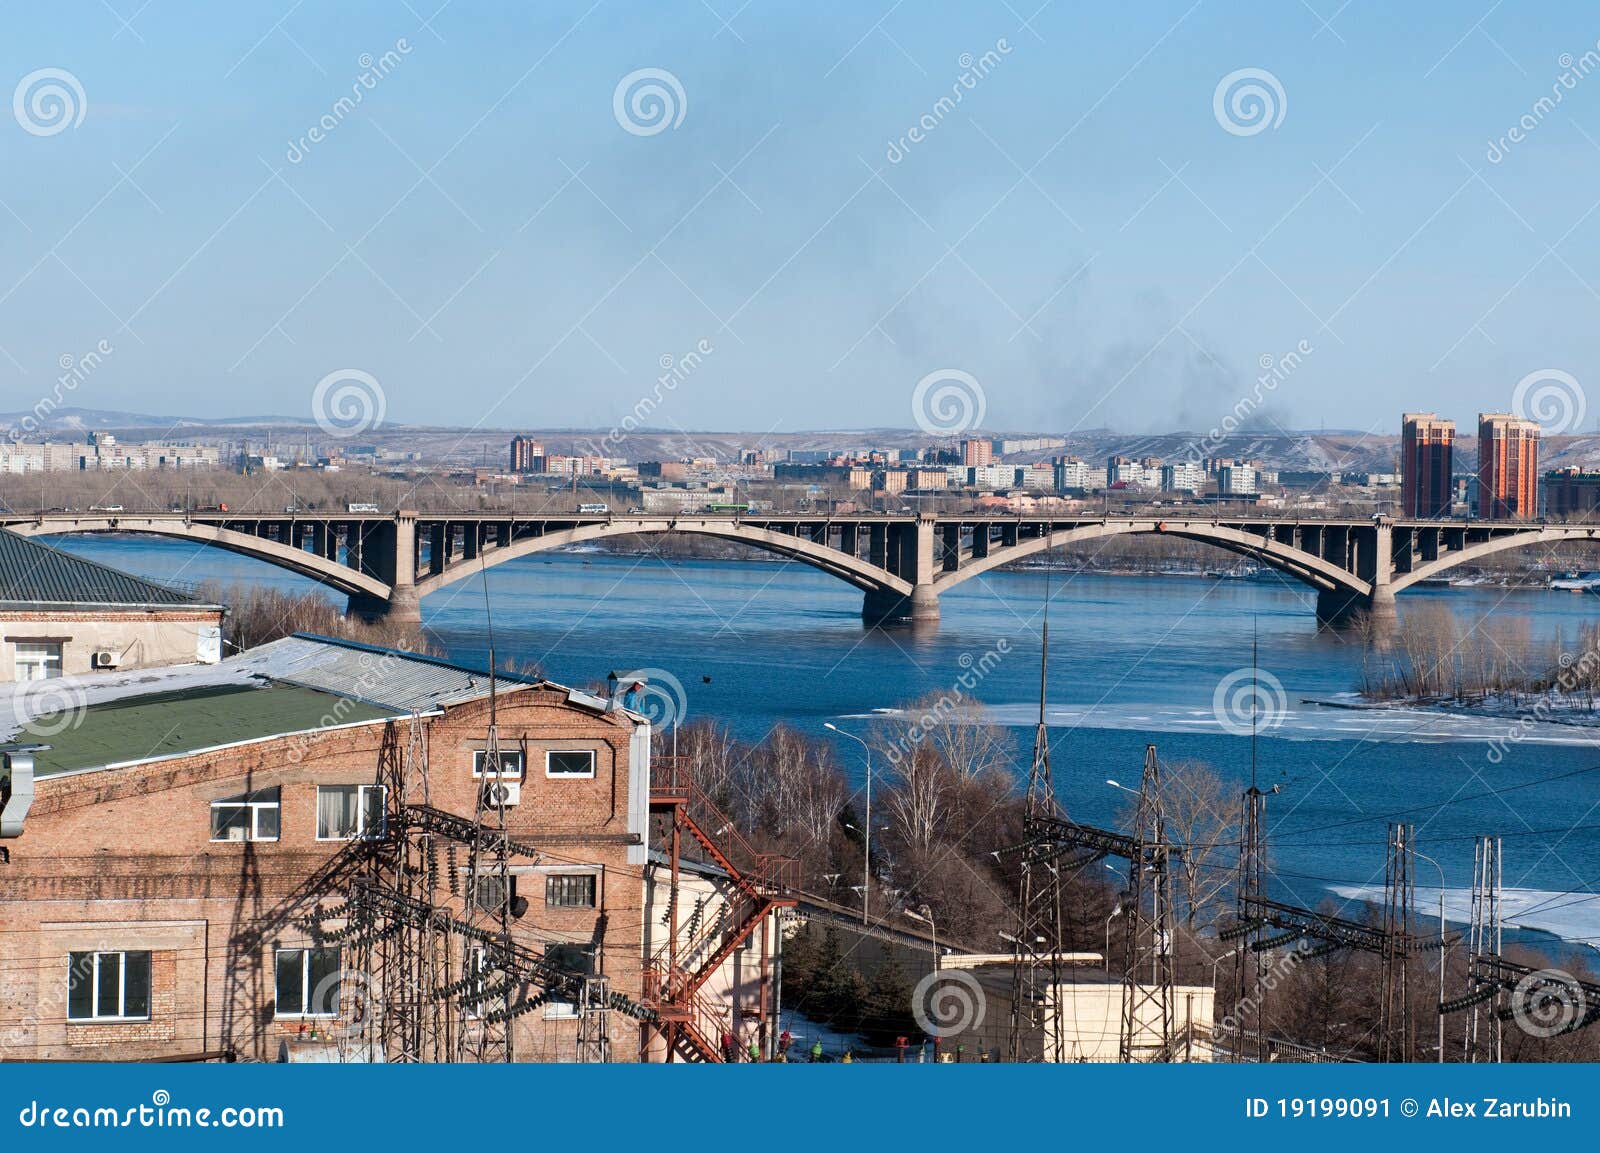 view on krasnoyarsk and bridge over the river